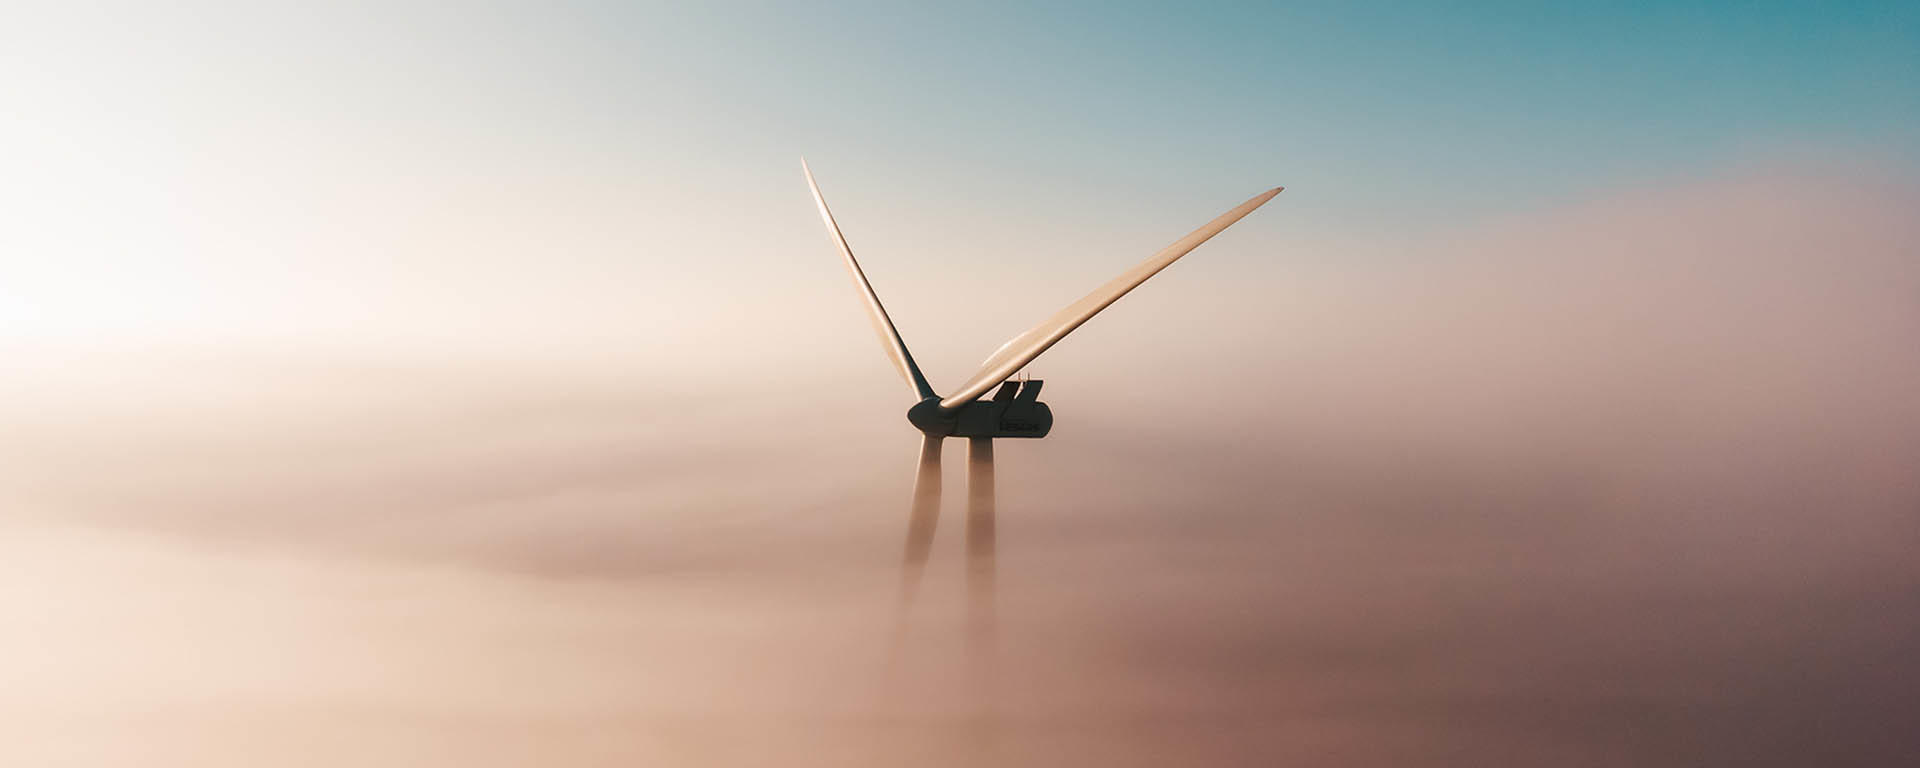 Wind turbine photograph by Sander Weeteling on Unsplash